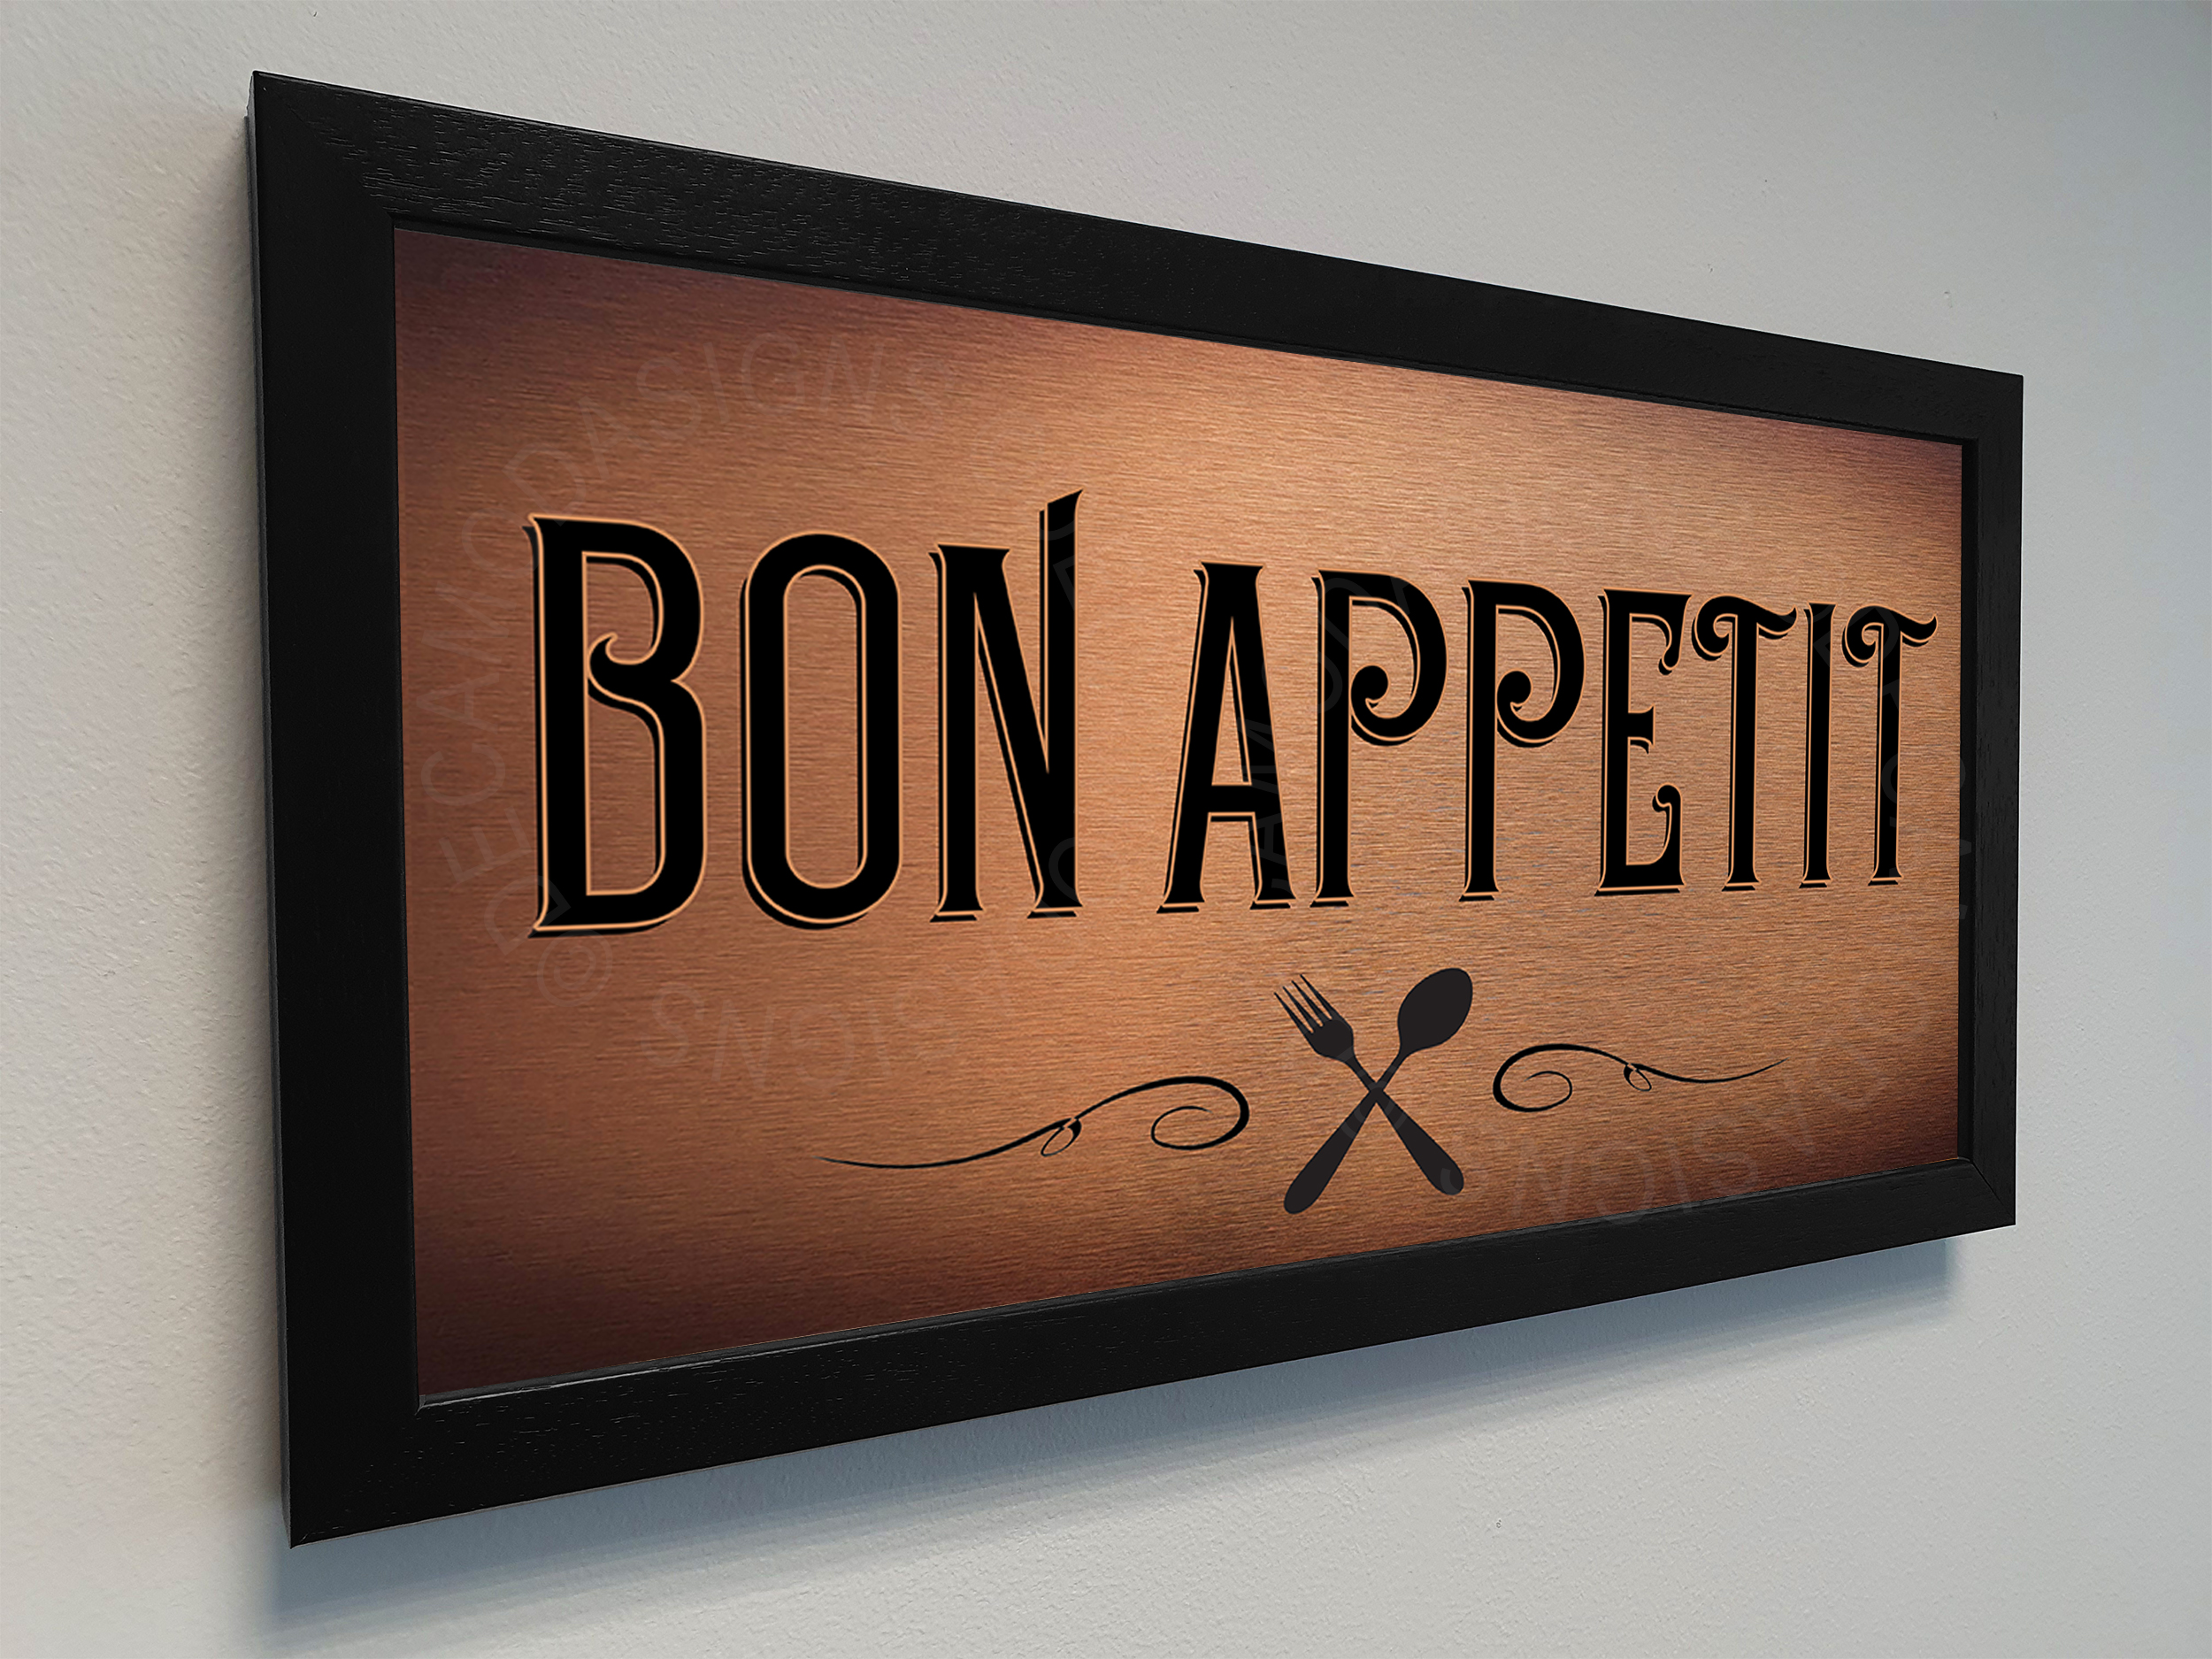 Bon Appetit Kitchen Signs